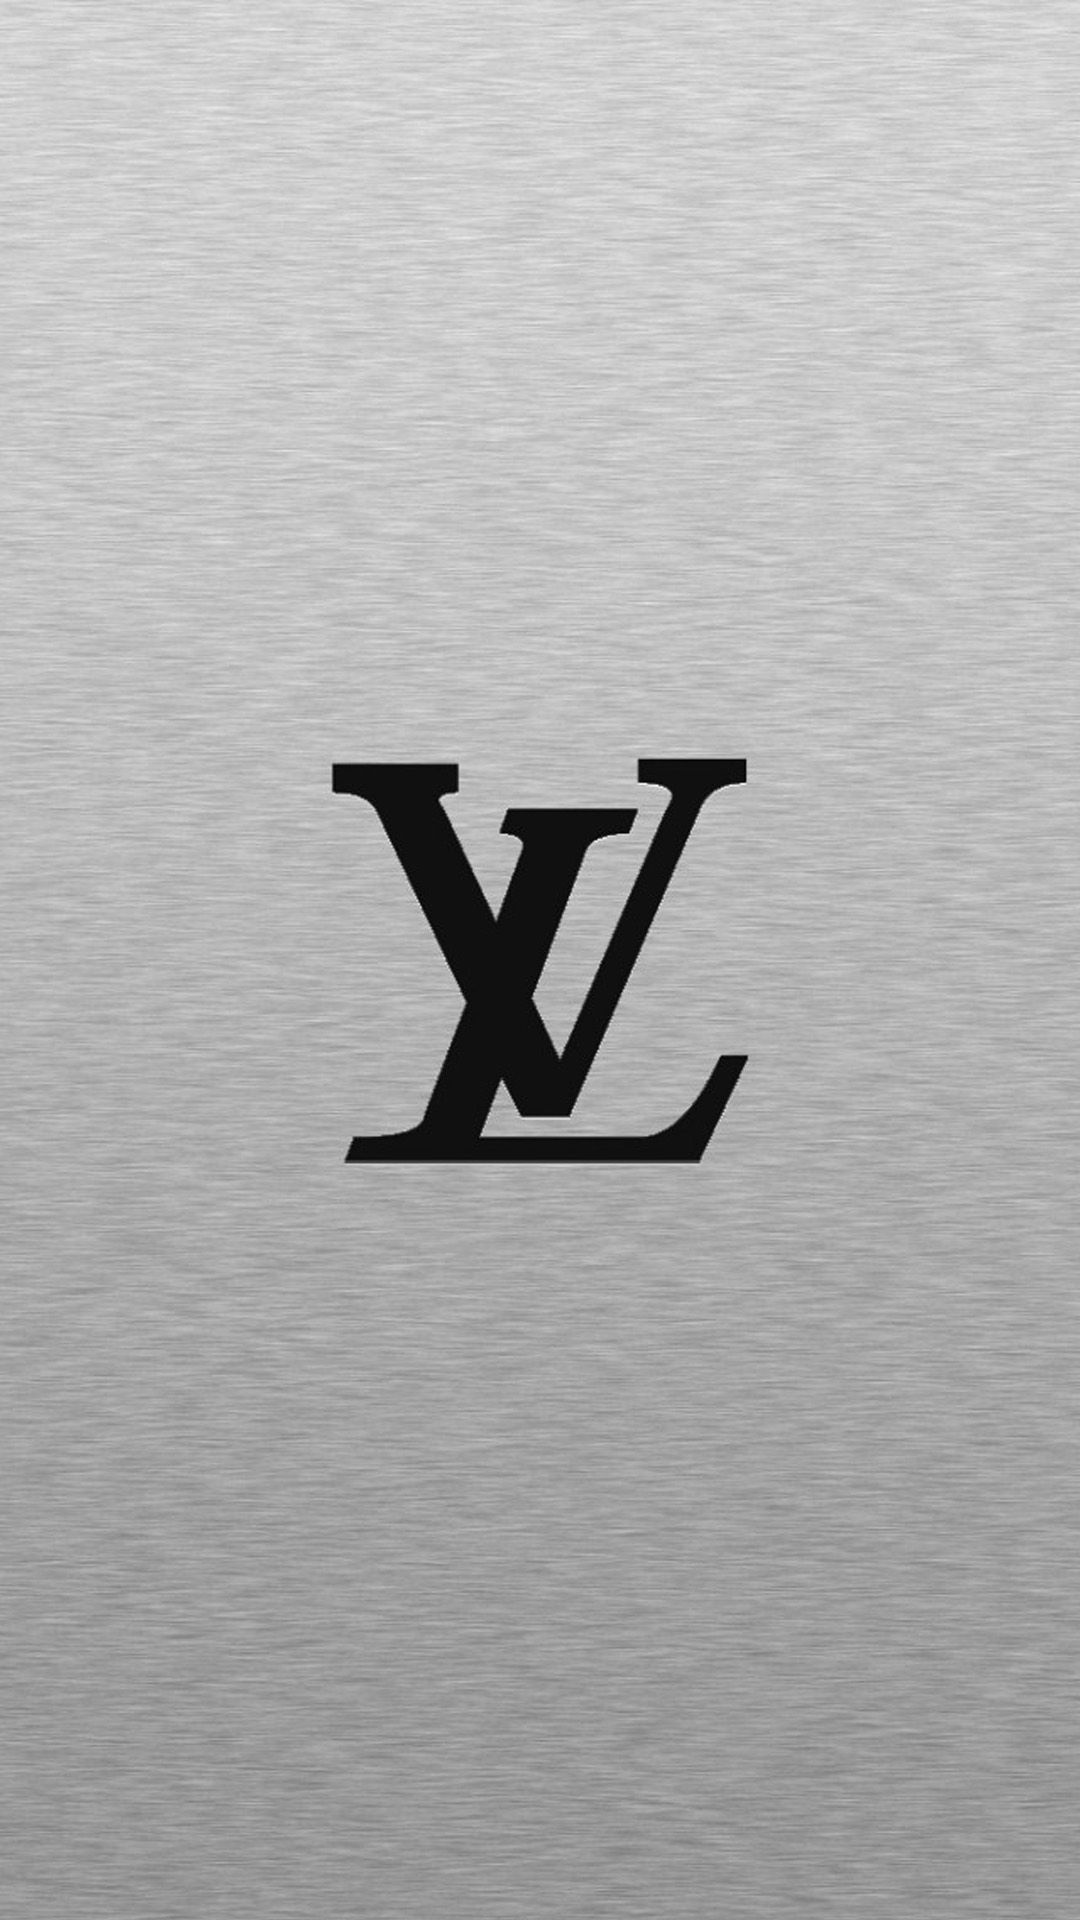 LOUIS VUITTON WALLPAPER, Louis vuitton iphone wallpaper, Louis vuitton  drawing logo, …